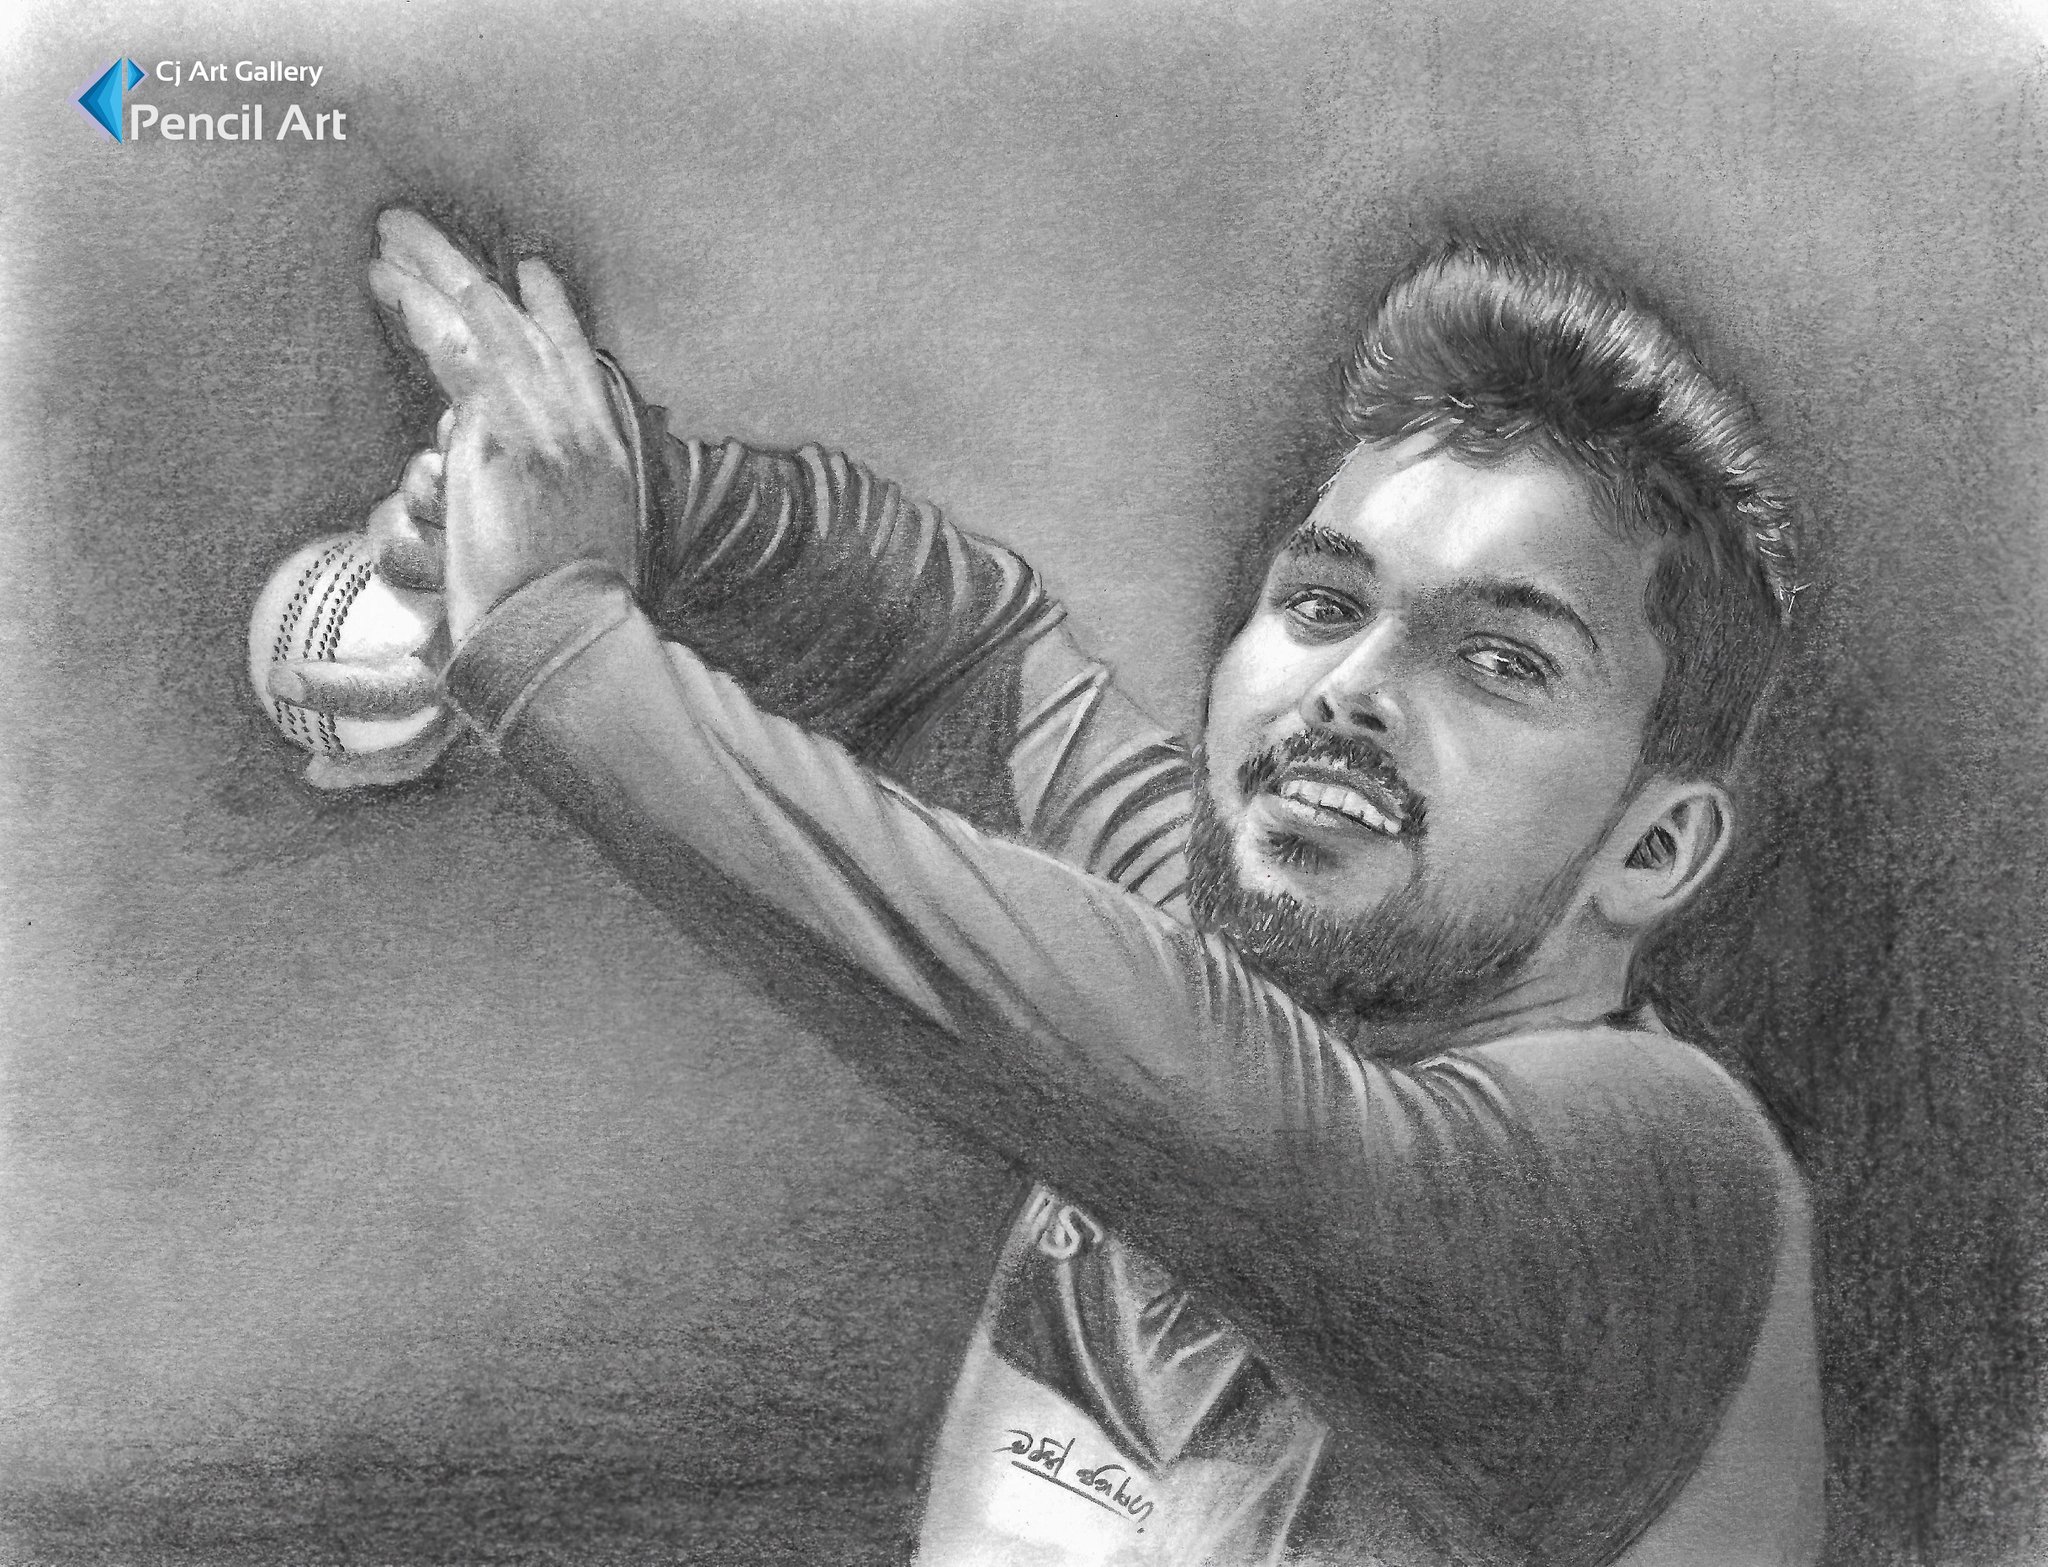 Art of Perception - Pencil drawing of the Sri Lankan cricket legend Kumar  Sangakkara. He is a Sri Lankan cricket commentator, cricketer and former  captain of the Sri Lanka national cricket team.